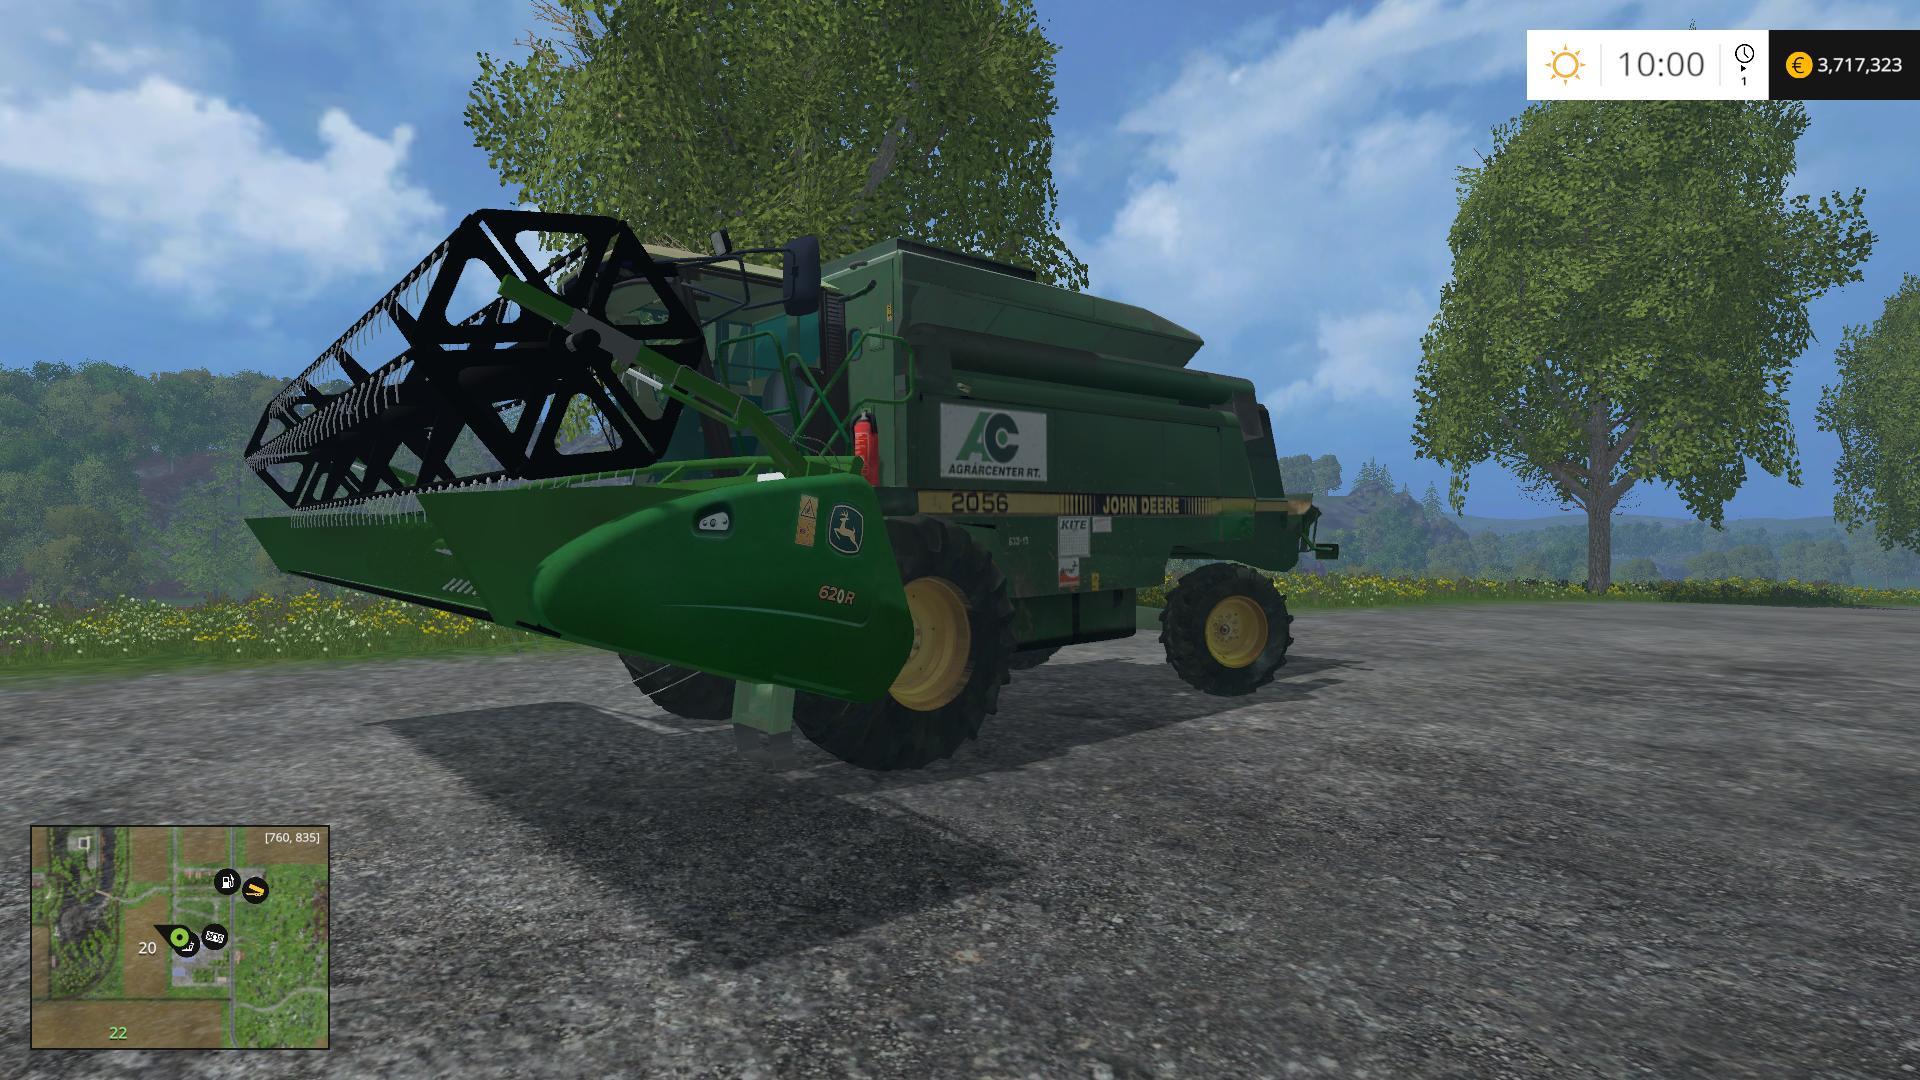 John Deere 2056 V20 • Farming Simulator 19 17 22 Mods Fs19 17 22 5319